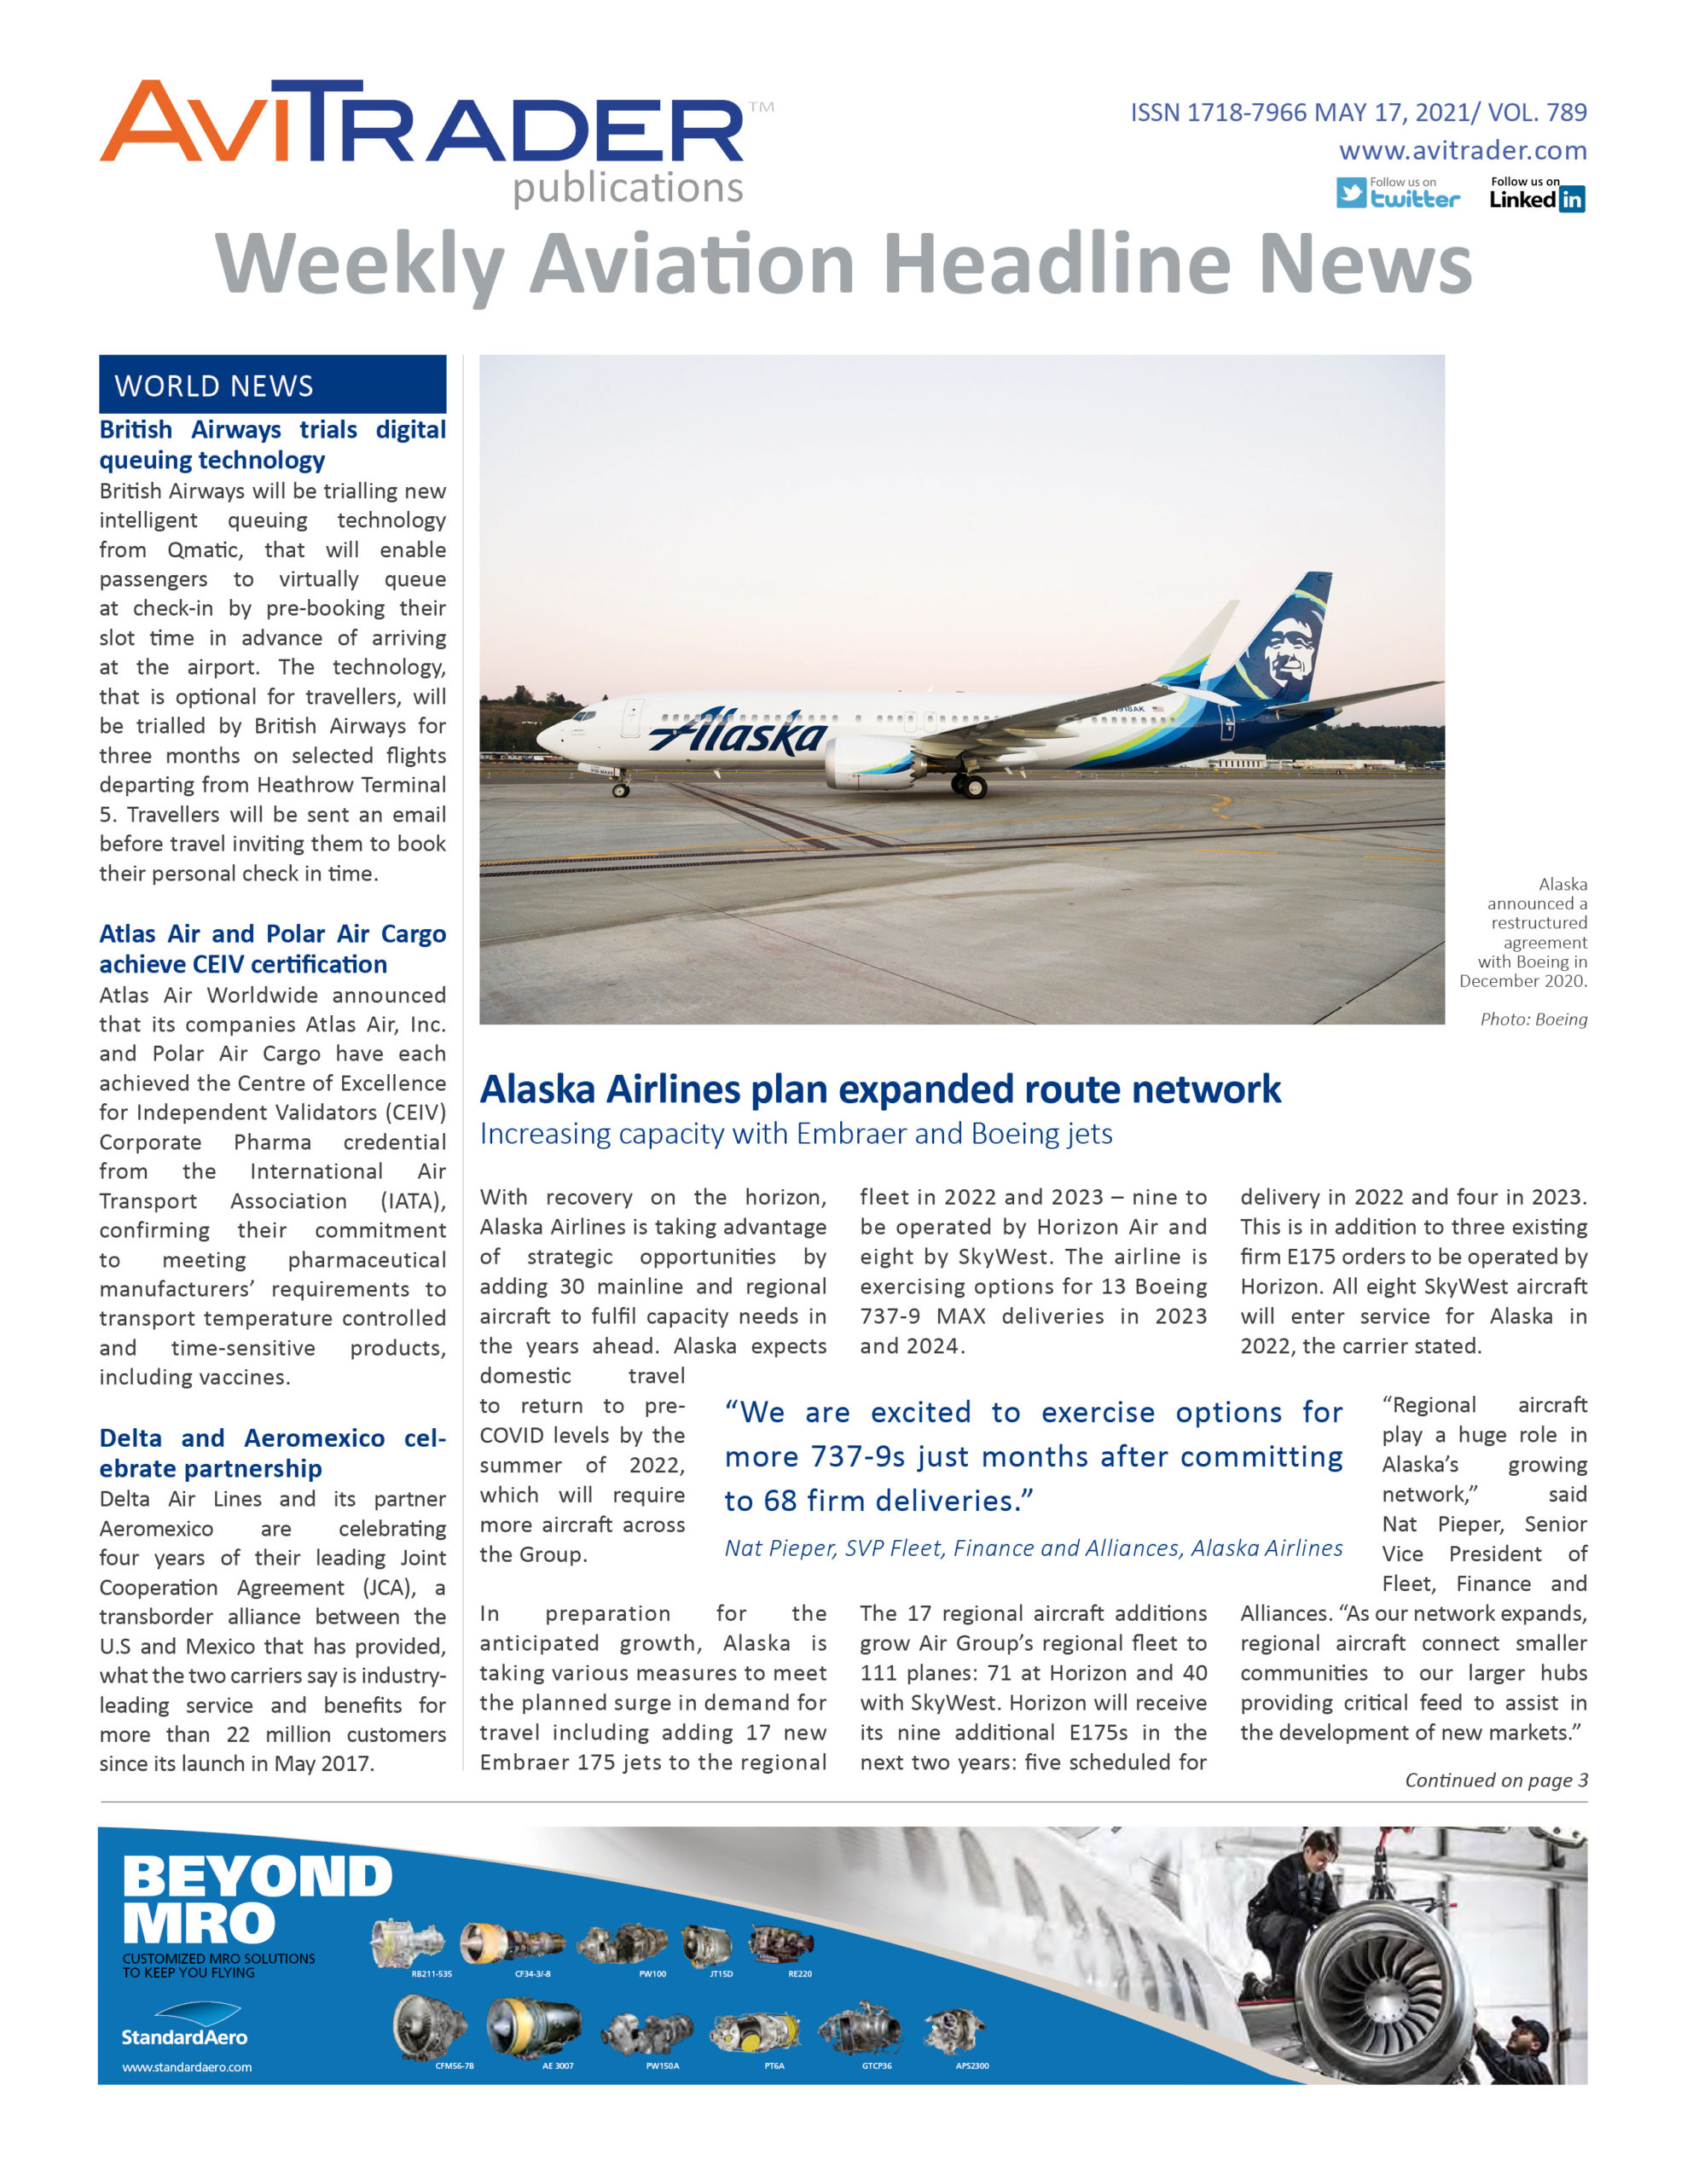 AviTrader_Weekly_Headline_News_Cover_2021-05-17